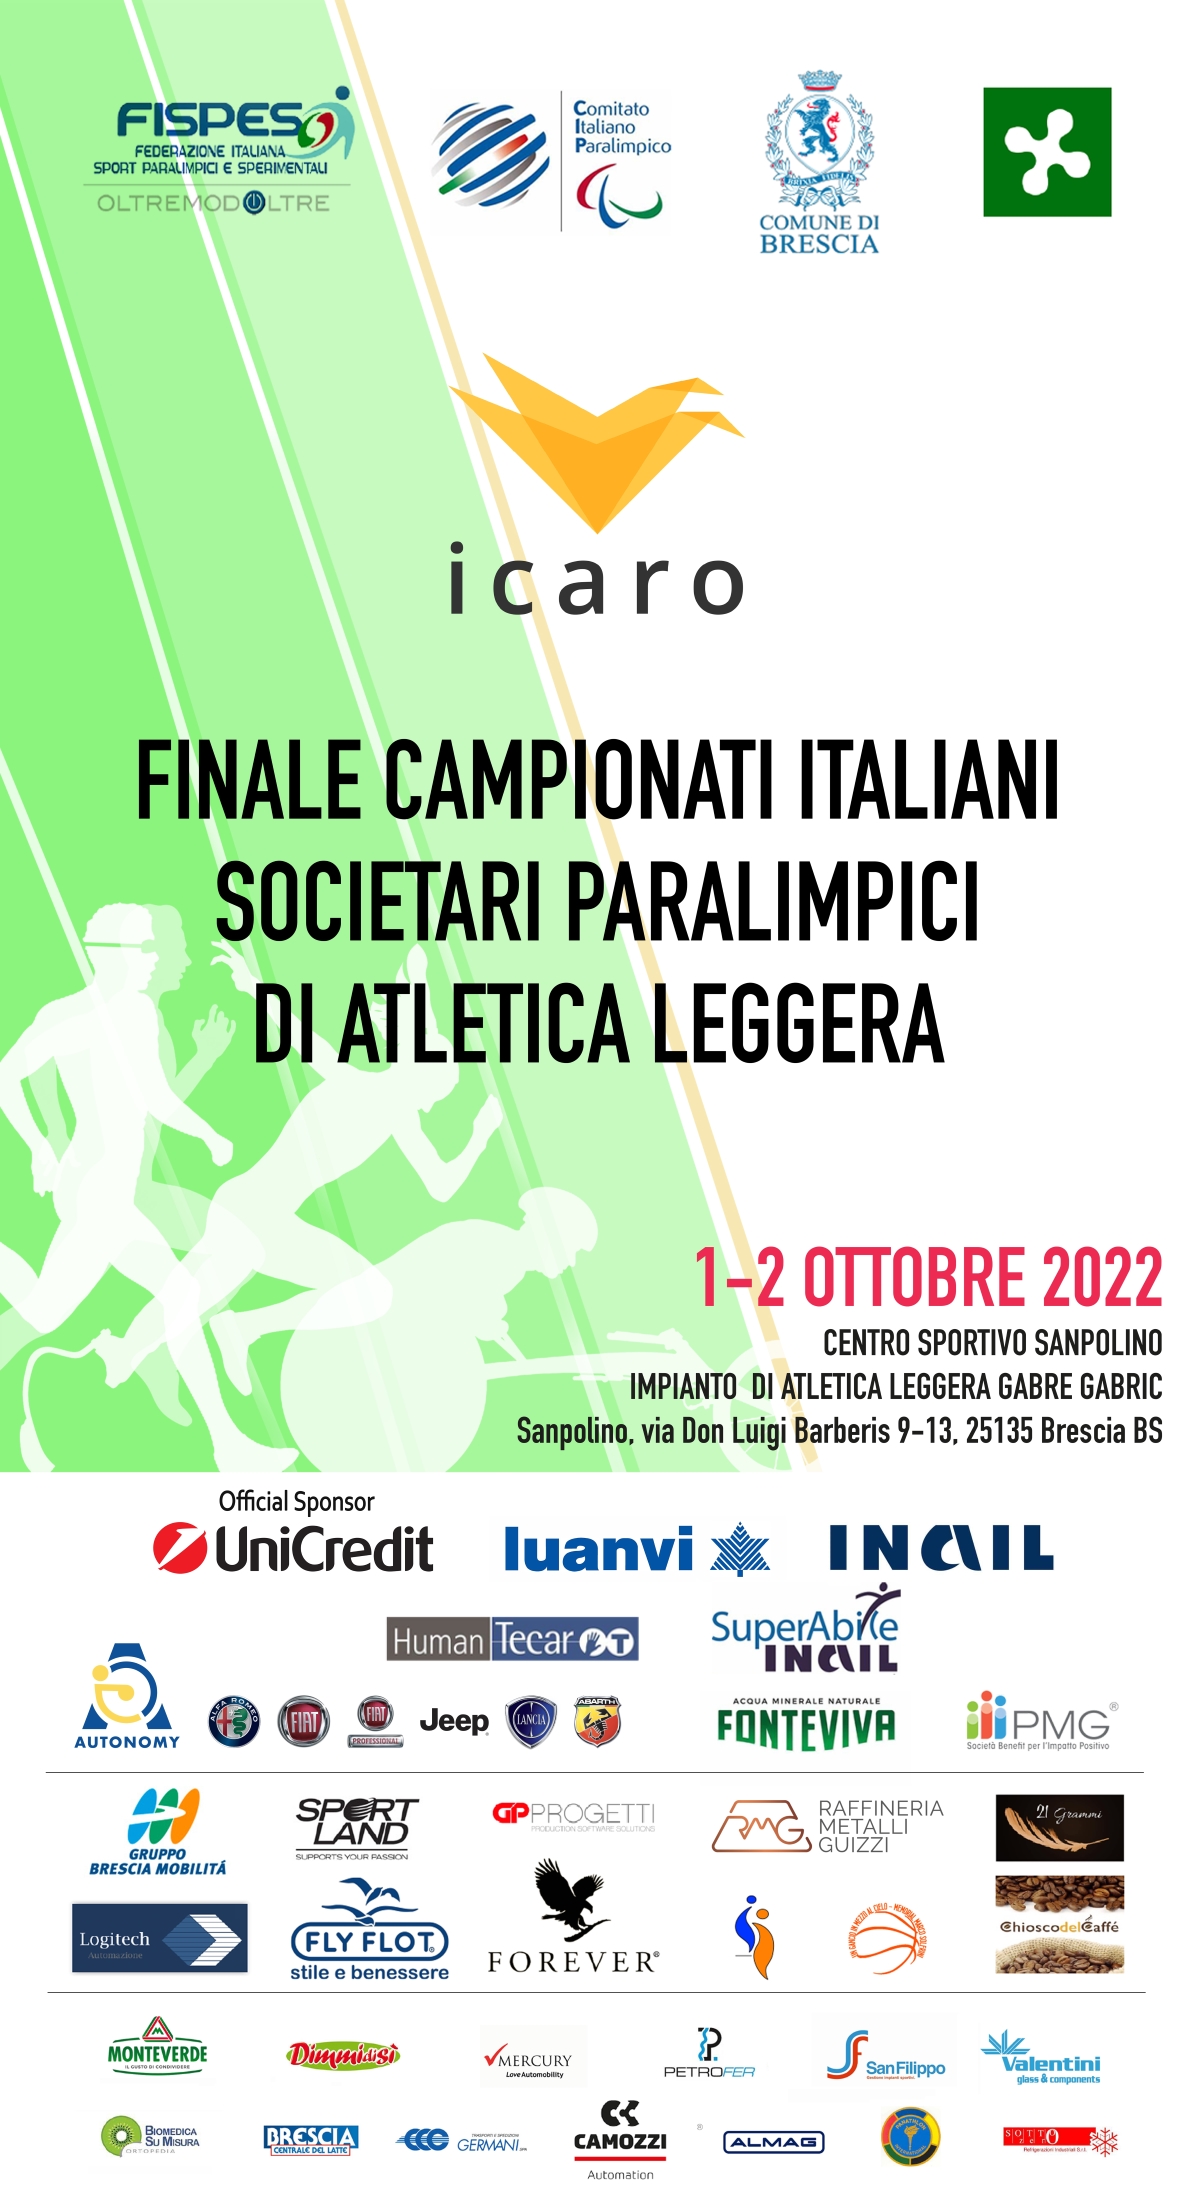 save_the_date_finali_campionati_italiani_paralimpici_fonte_icaro_onlus.jpg